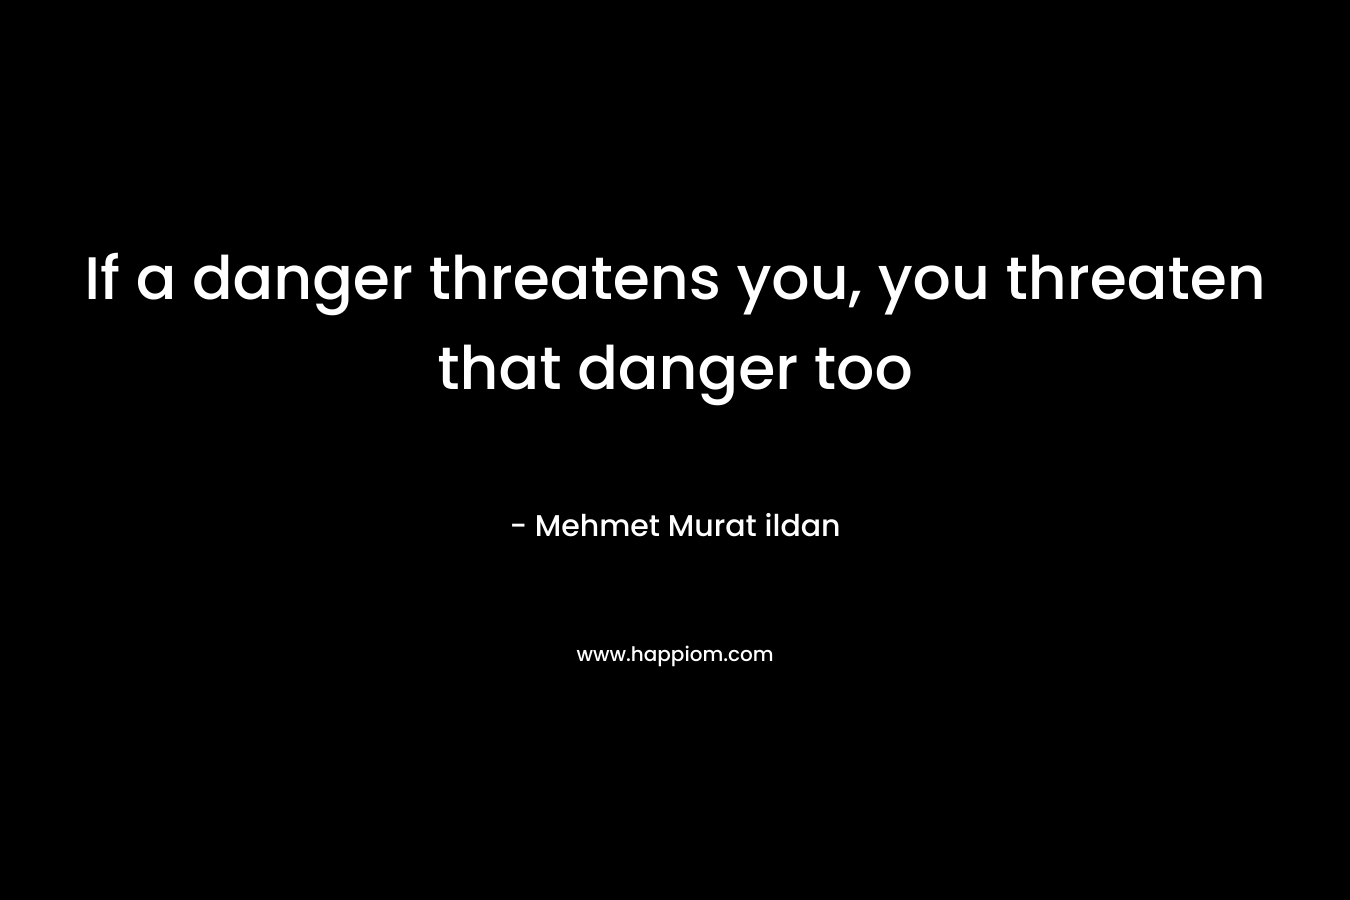 If a danger threatens you, you threaten that danger too